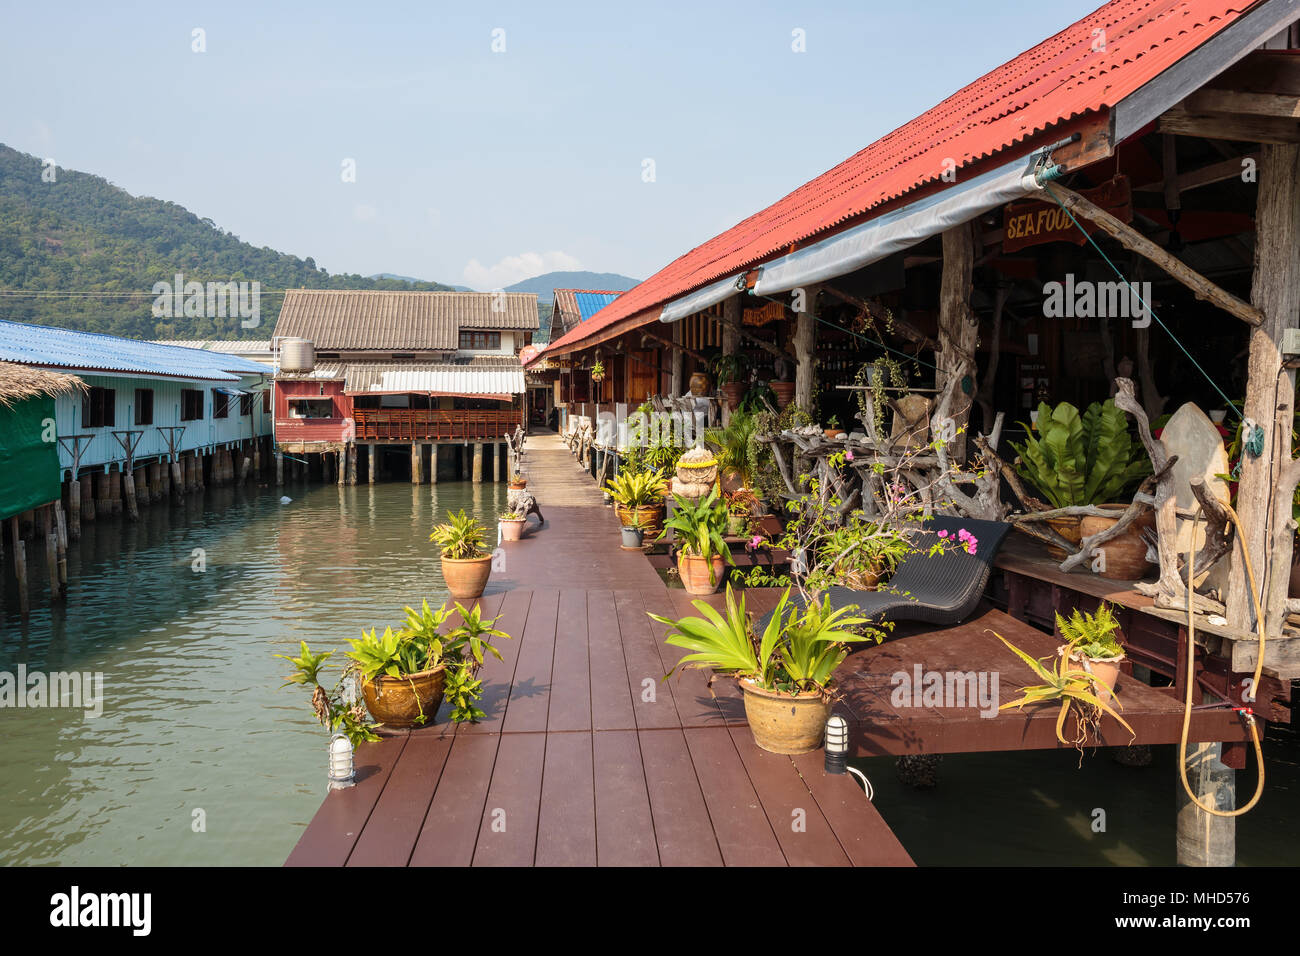 KOH CHANG, THAILAND - 26 MAR, 2015: Houses on stilts in the fishing village of Bang Bao, Koh Chang, Thailand Stock Photo